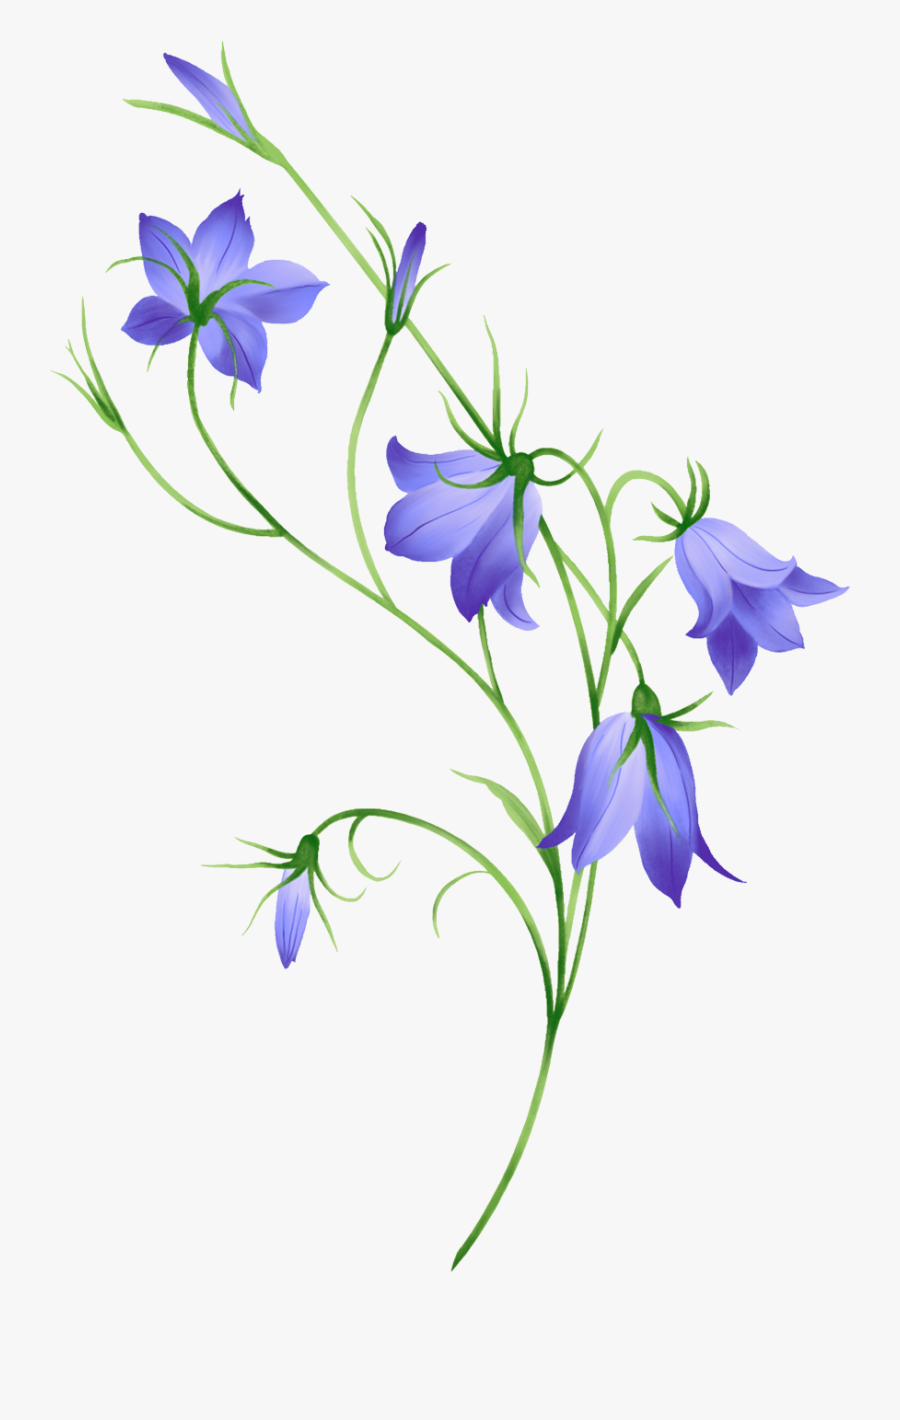 Morning Glory, Bellflower, Leaf, Nature - Flower Bell Design, Transparent Clipart